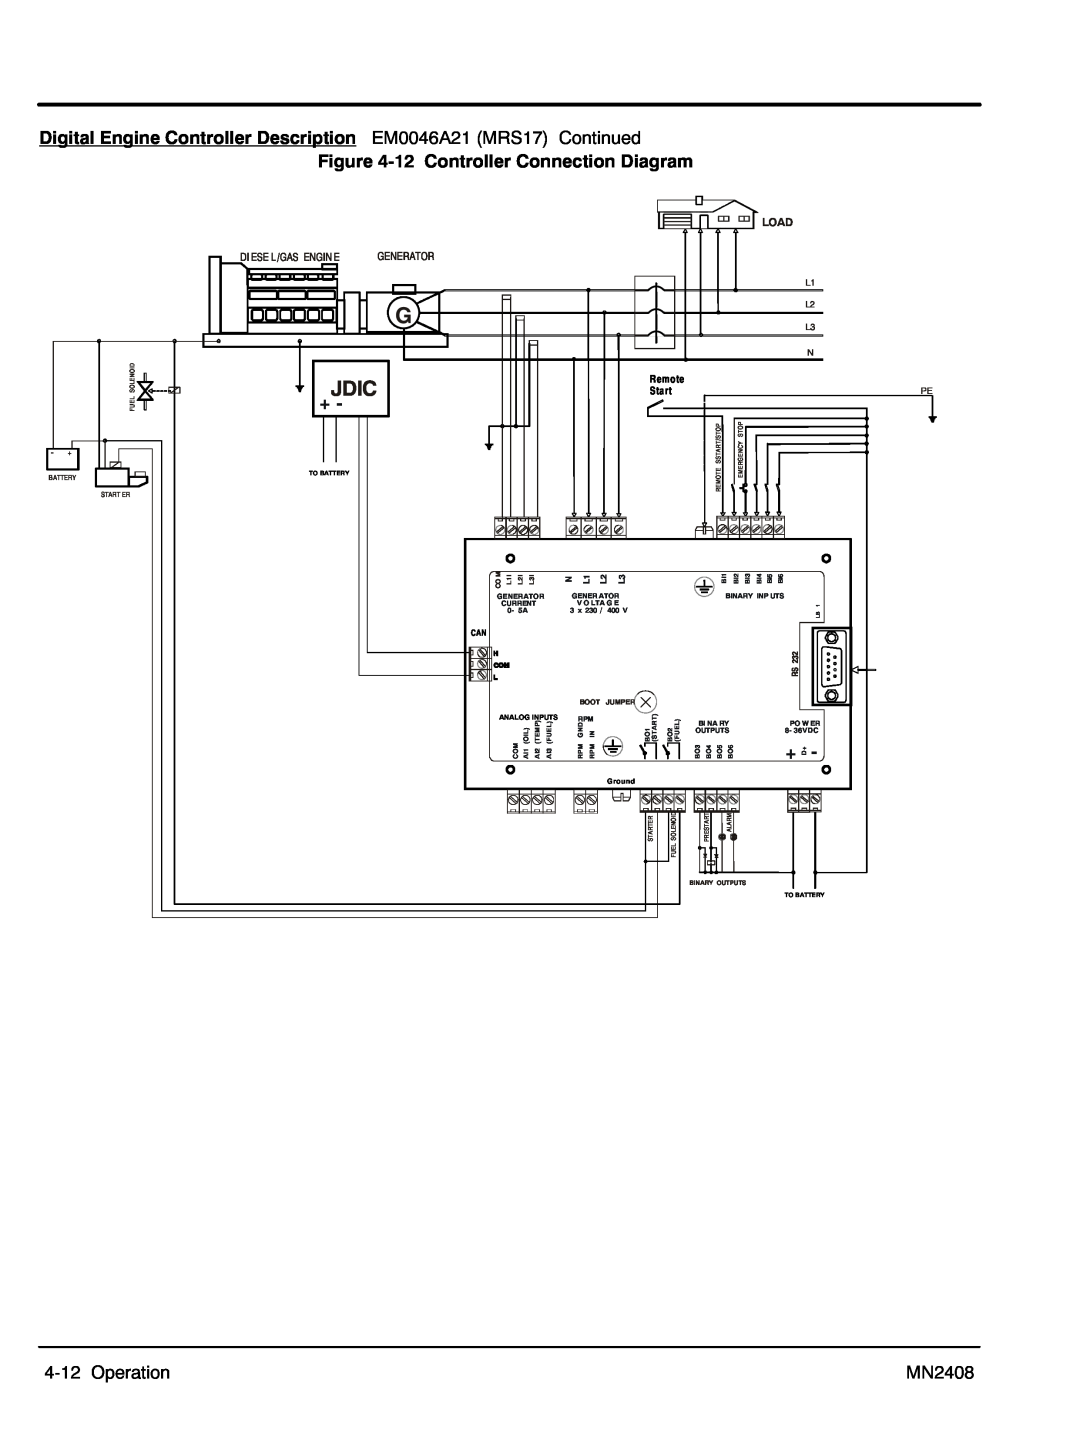 Baldor GLC15 Jdic, Digital Engine Controller Description EM0046A21 MRS17 Continued, ‐12 Controller Connection Diagram 